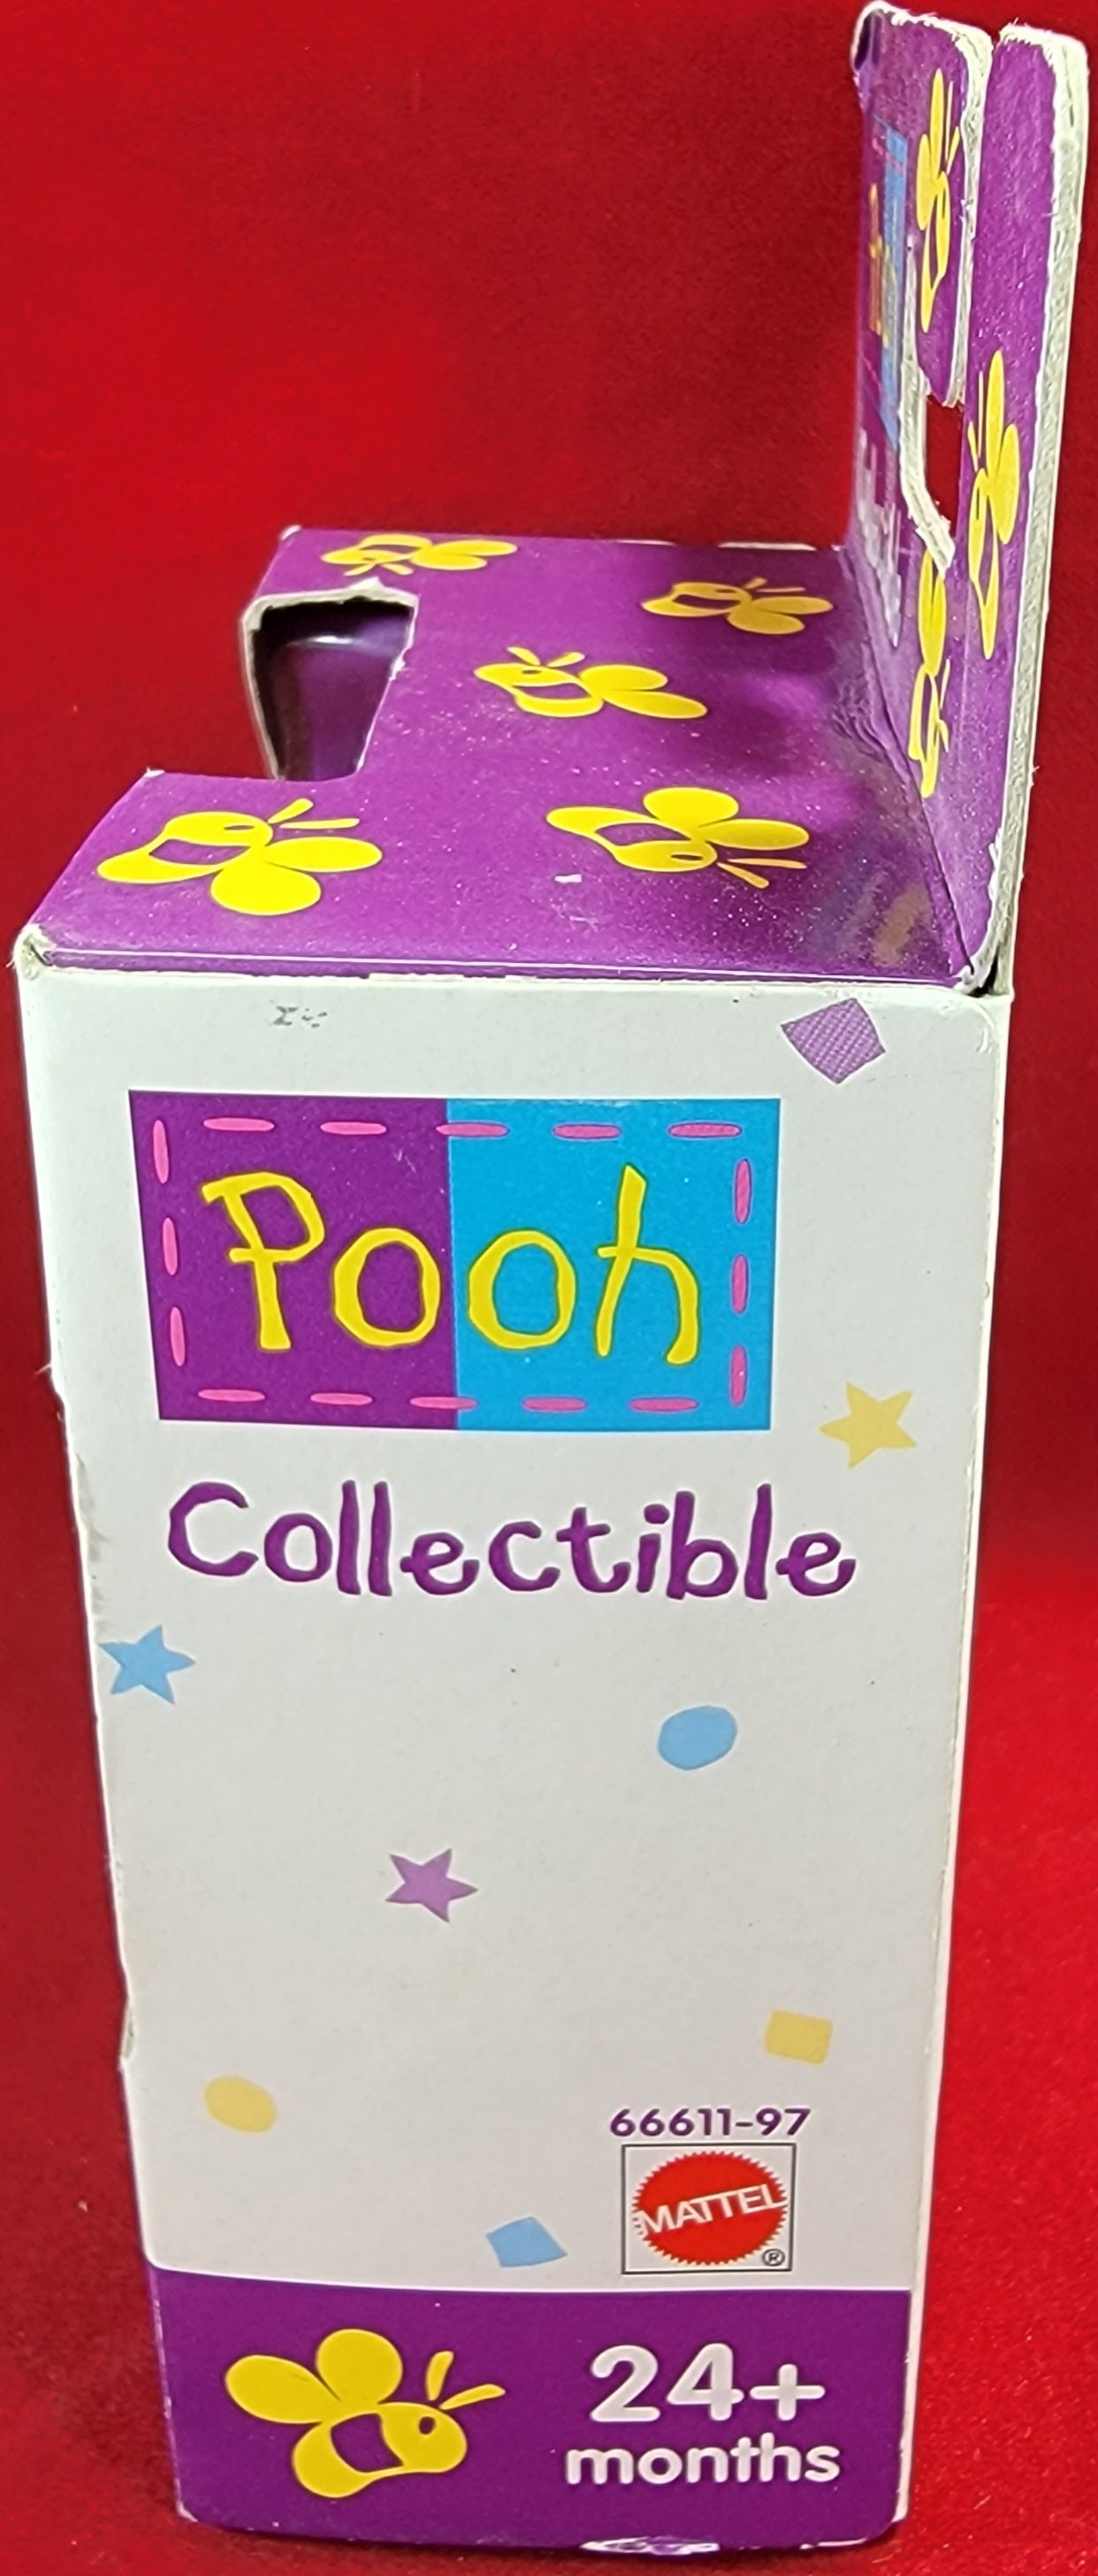 Pooh collectible  wise owl figure (nib)